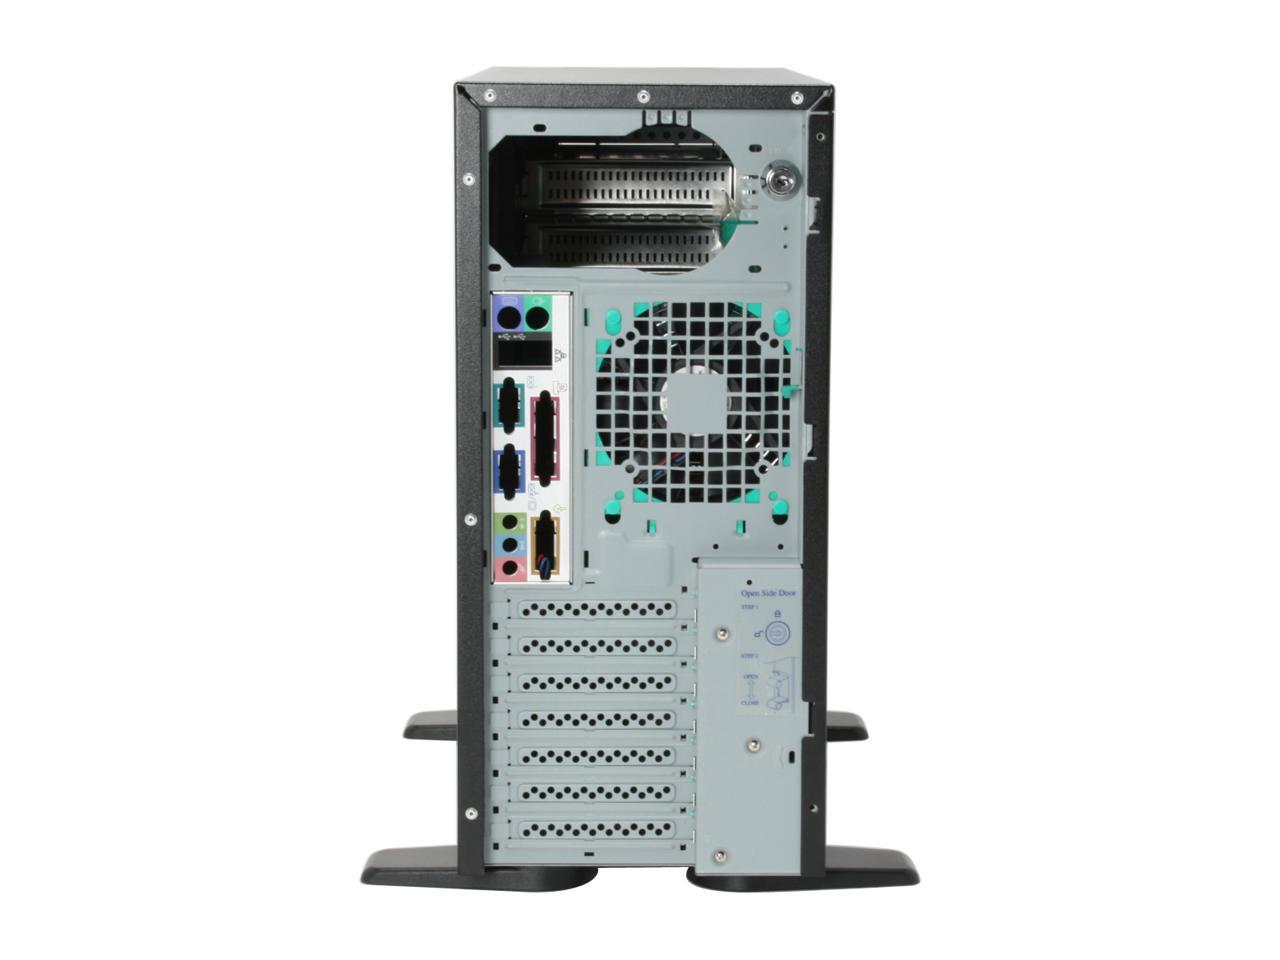 Chenbro Sr20969-Co Black 0.8 Mm Secc Pedestal Entry Level Atx Server/Workstation Chassis 3 External 5.25" Drive Bays